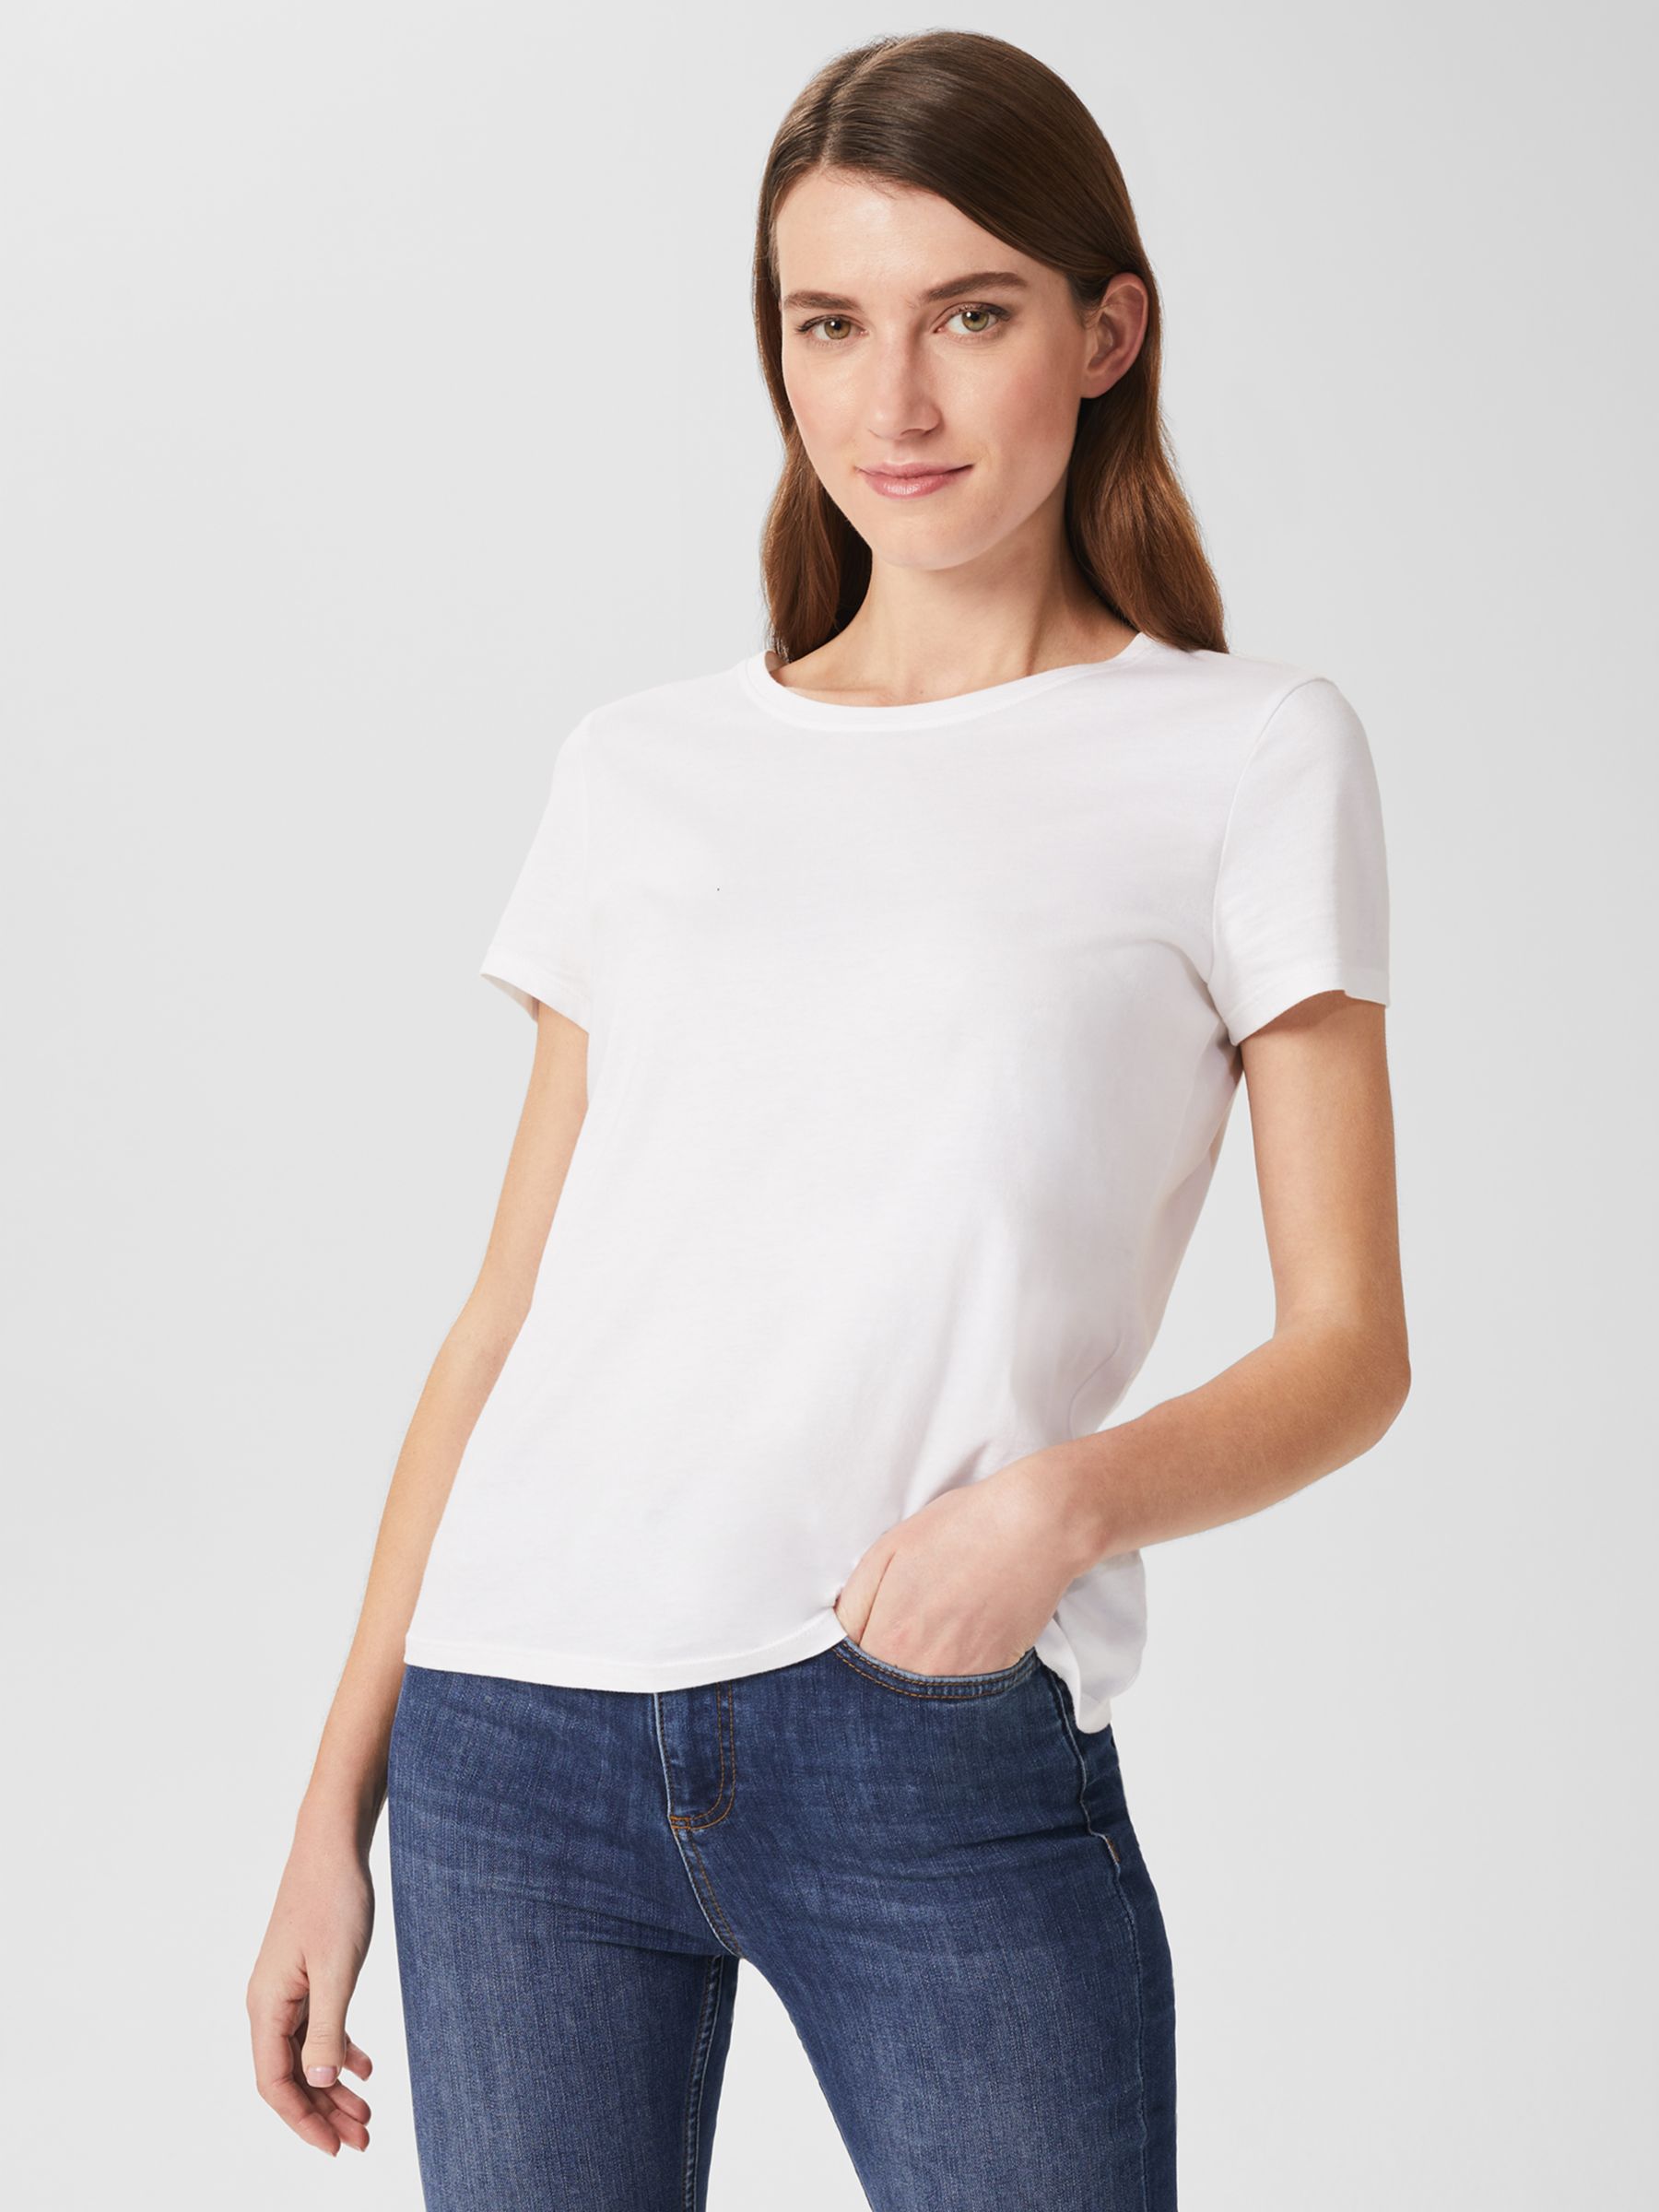 Hobbs Pixie Plain Cotton T-Shirt, White at John Lewis & Partners